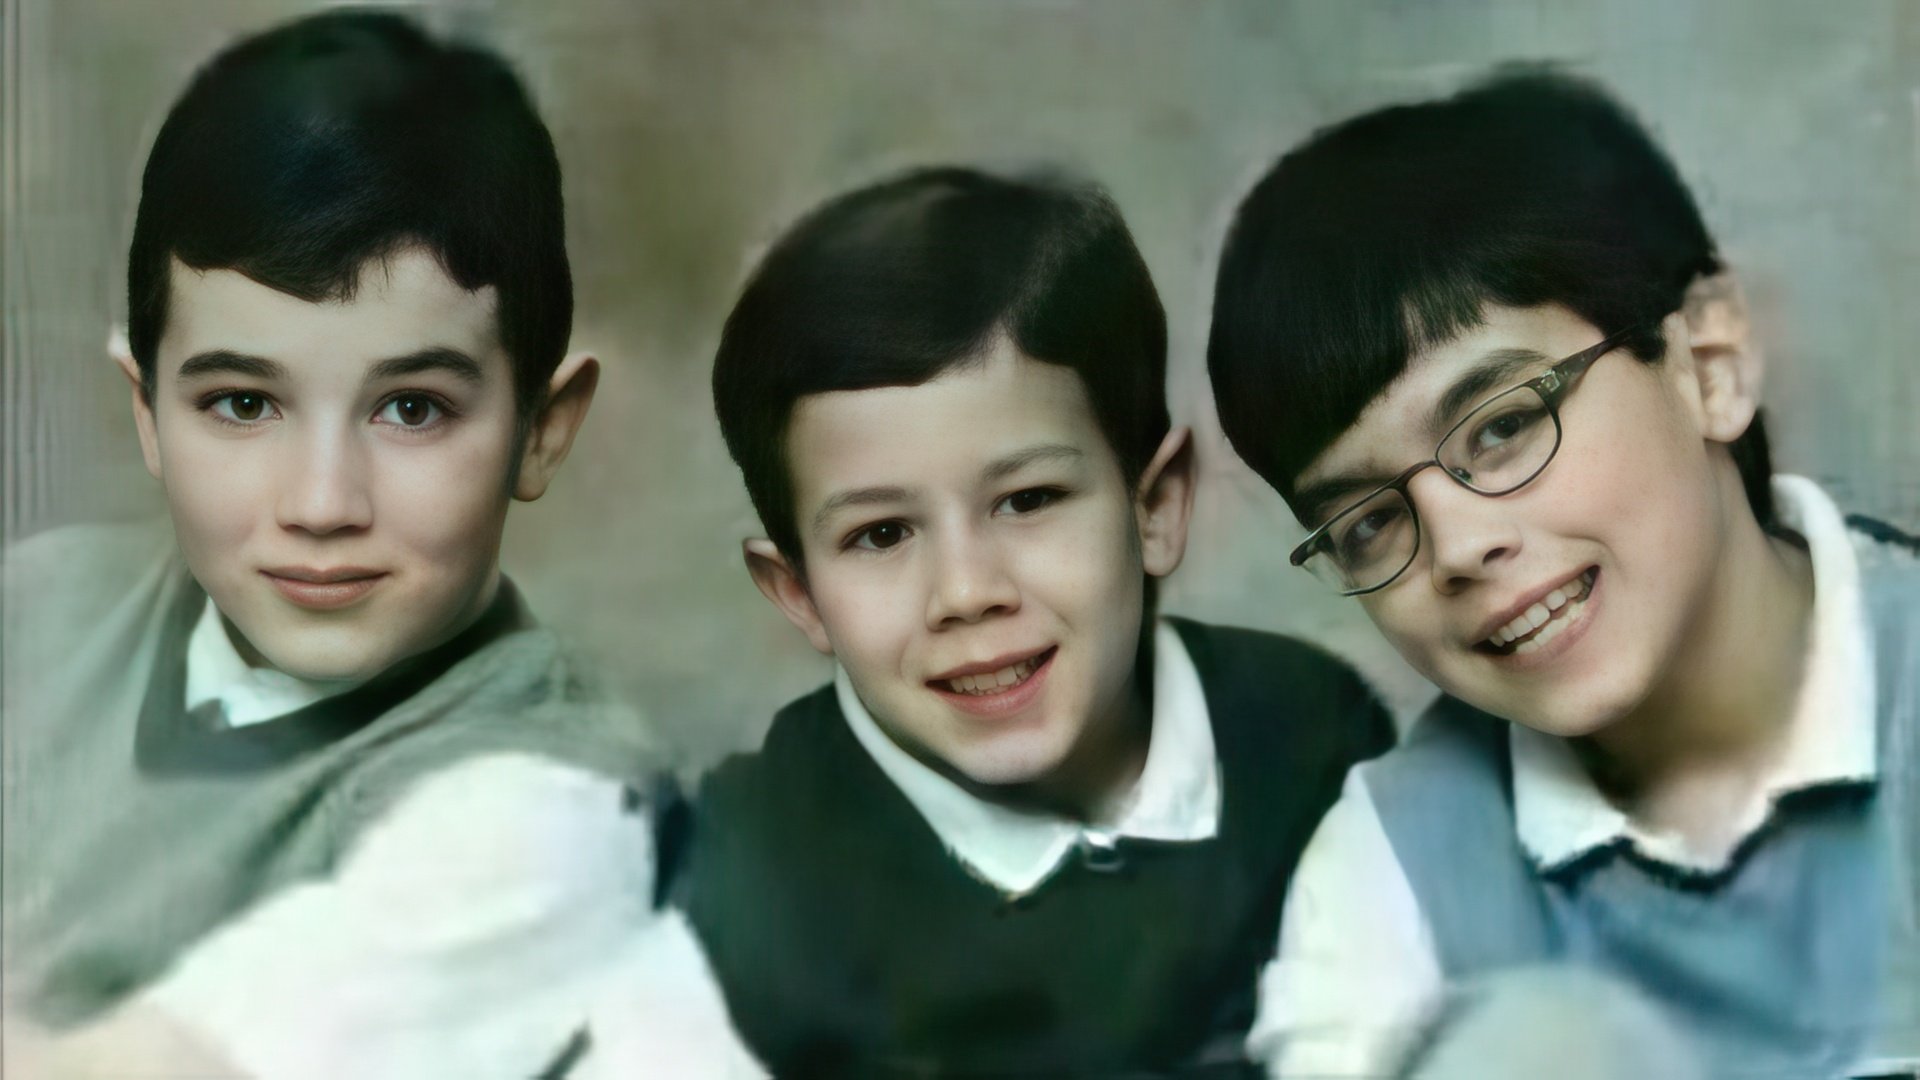 Childhood photo of Joe Jonas and his brothers